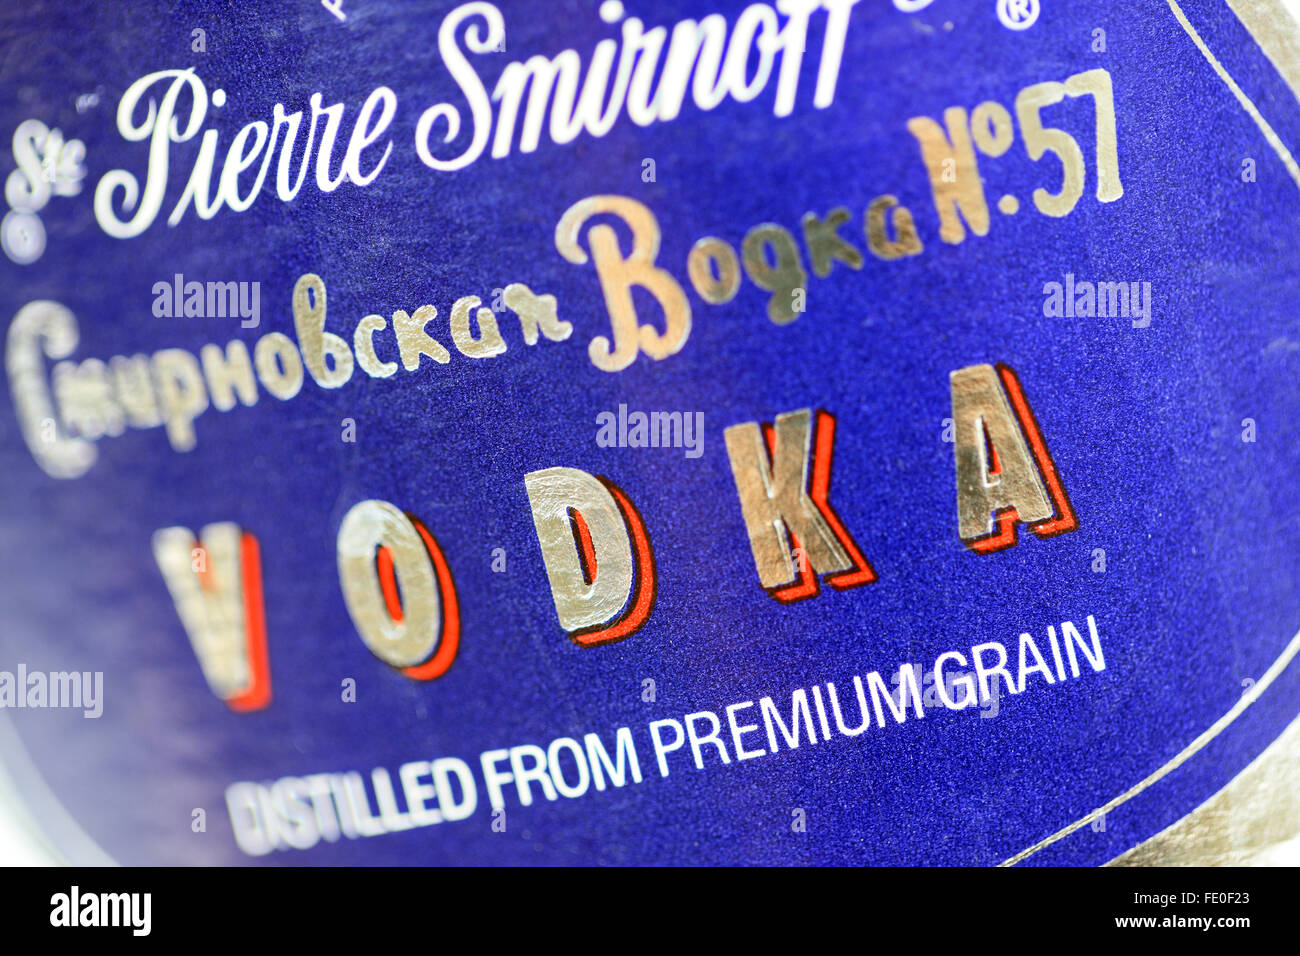 Blue vodka Photo Stock Smirnoff label - Alamy